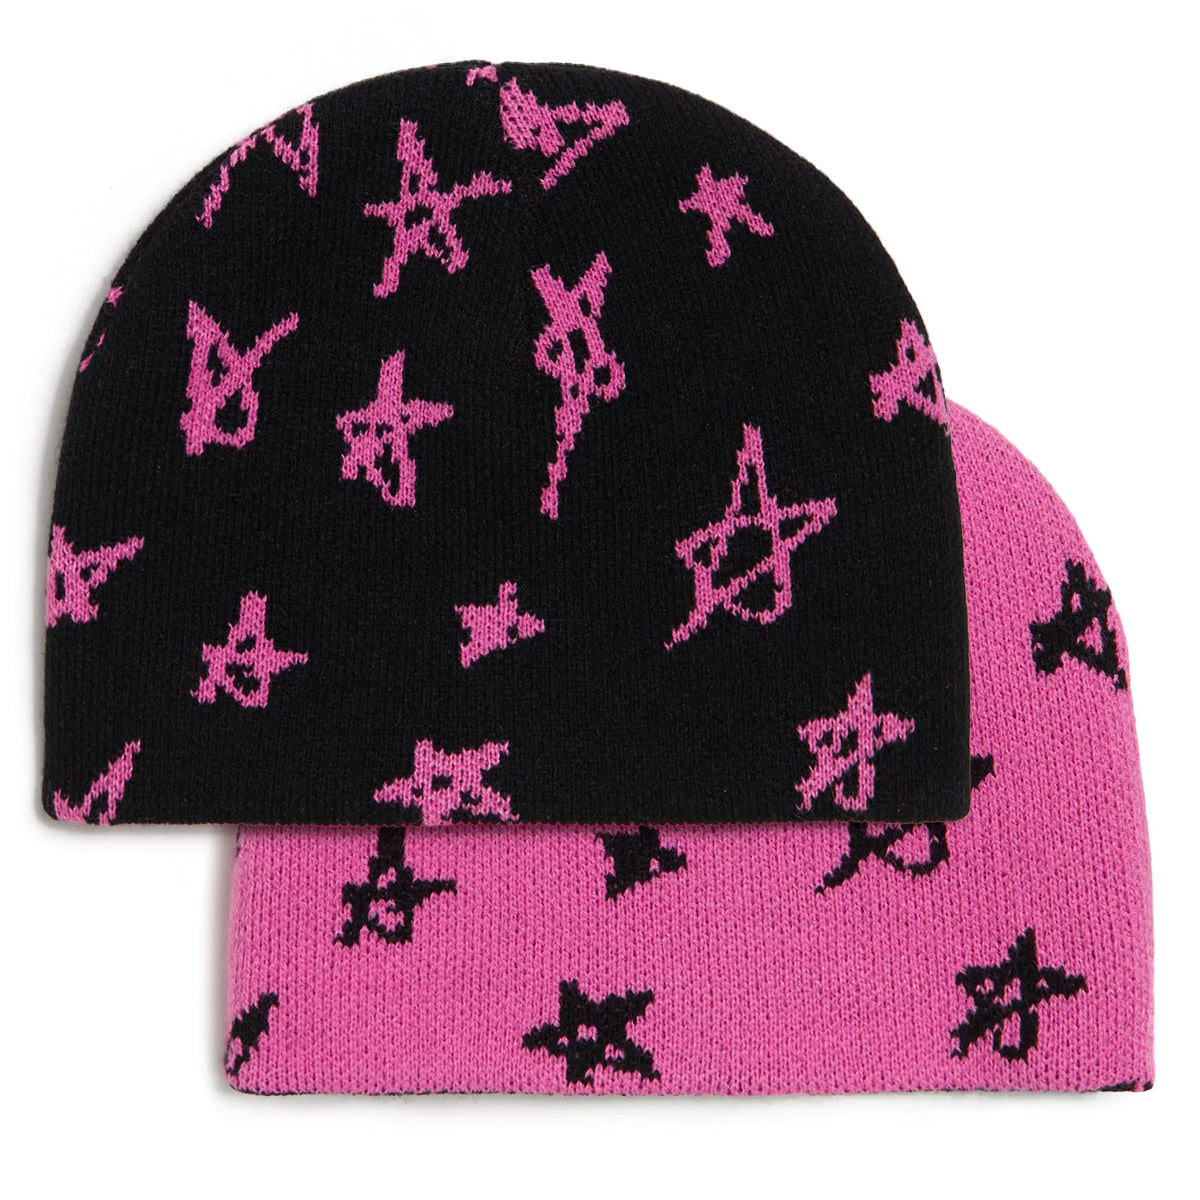 CCS Stars Reversible Skully Beanie - Black/Pink image 1